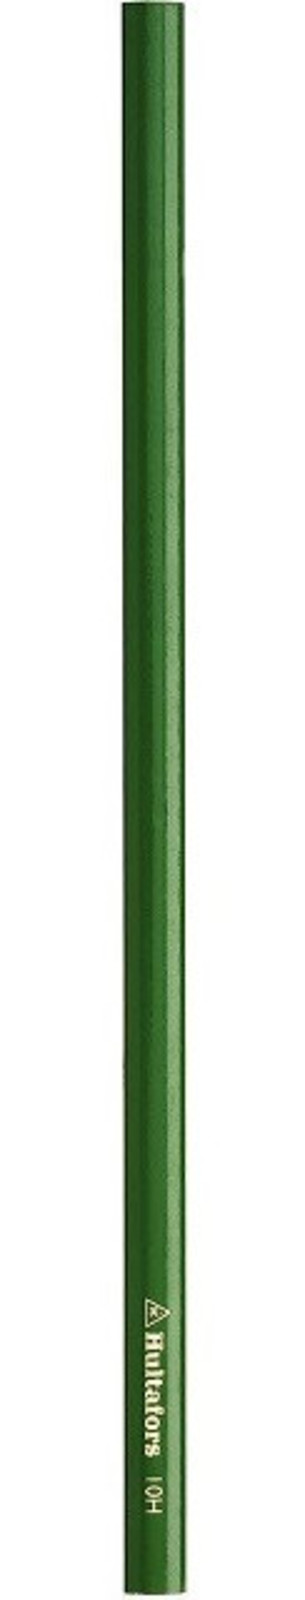 Murárska ceruzka Hultafors 300mm BEP 30 zelená - farba: zelená